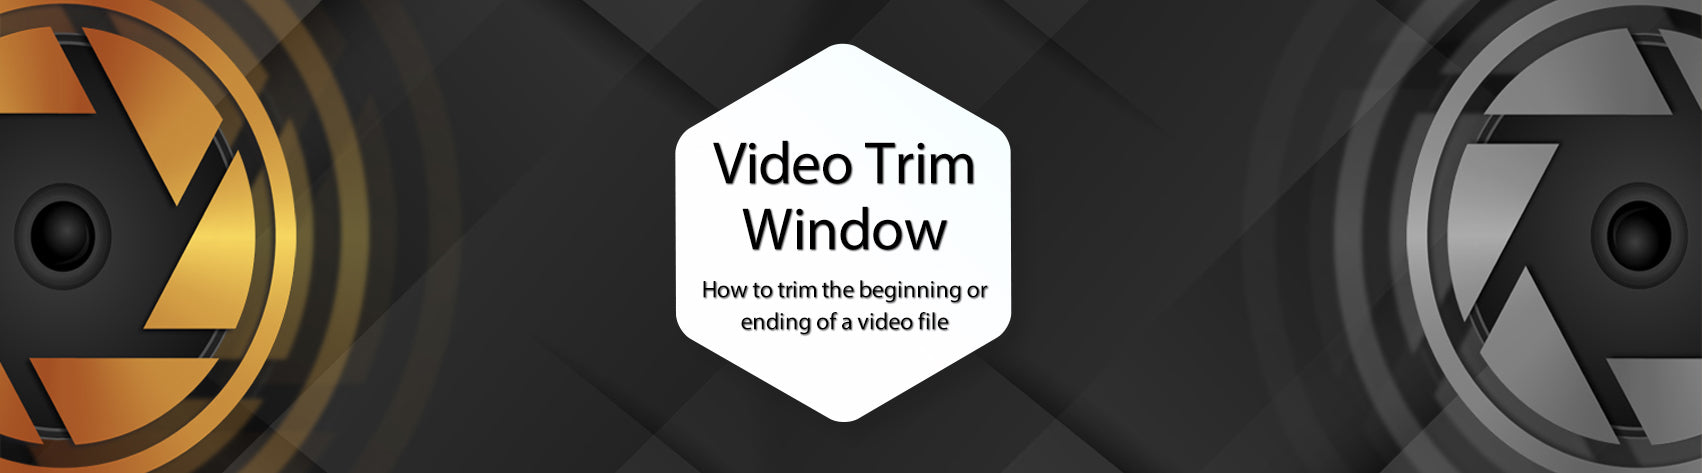 Tutorial - The Video Trim Window